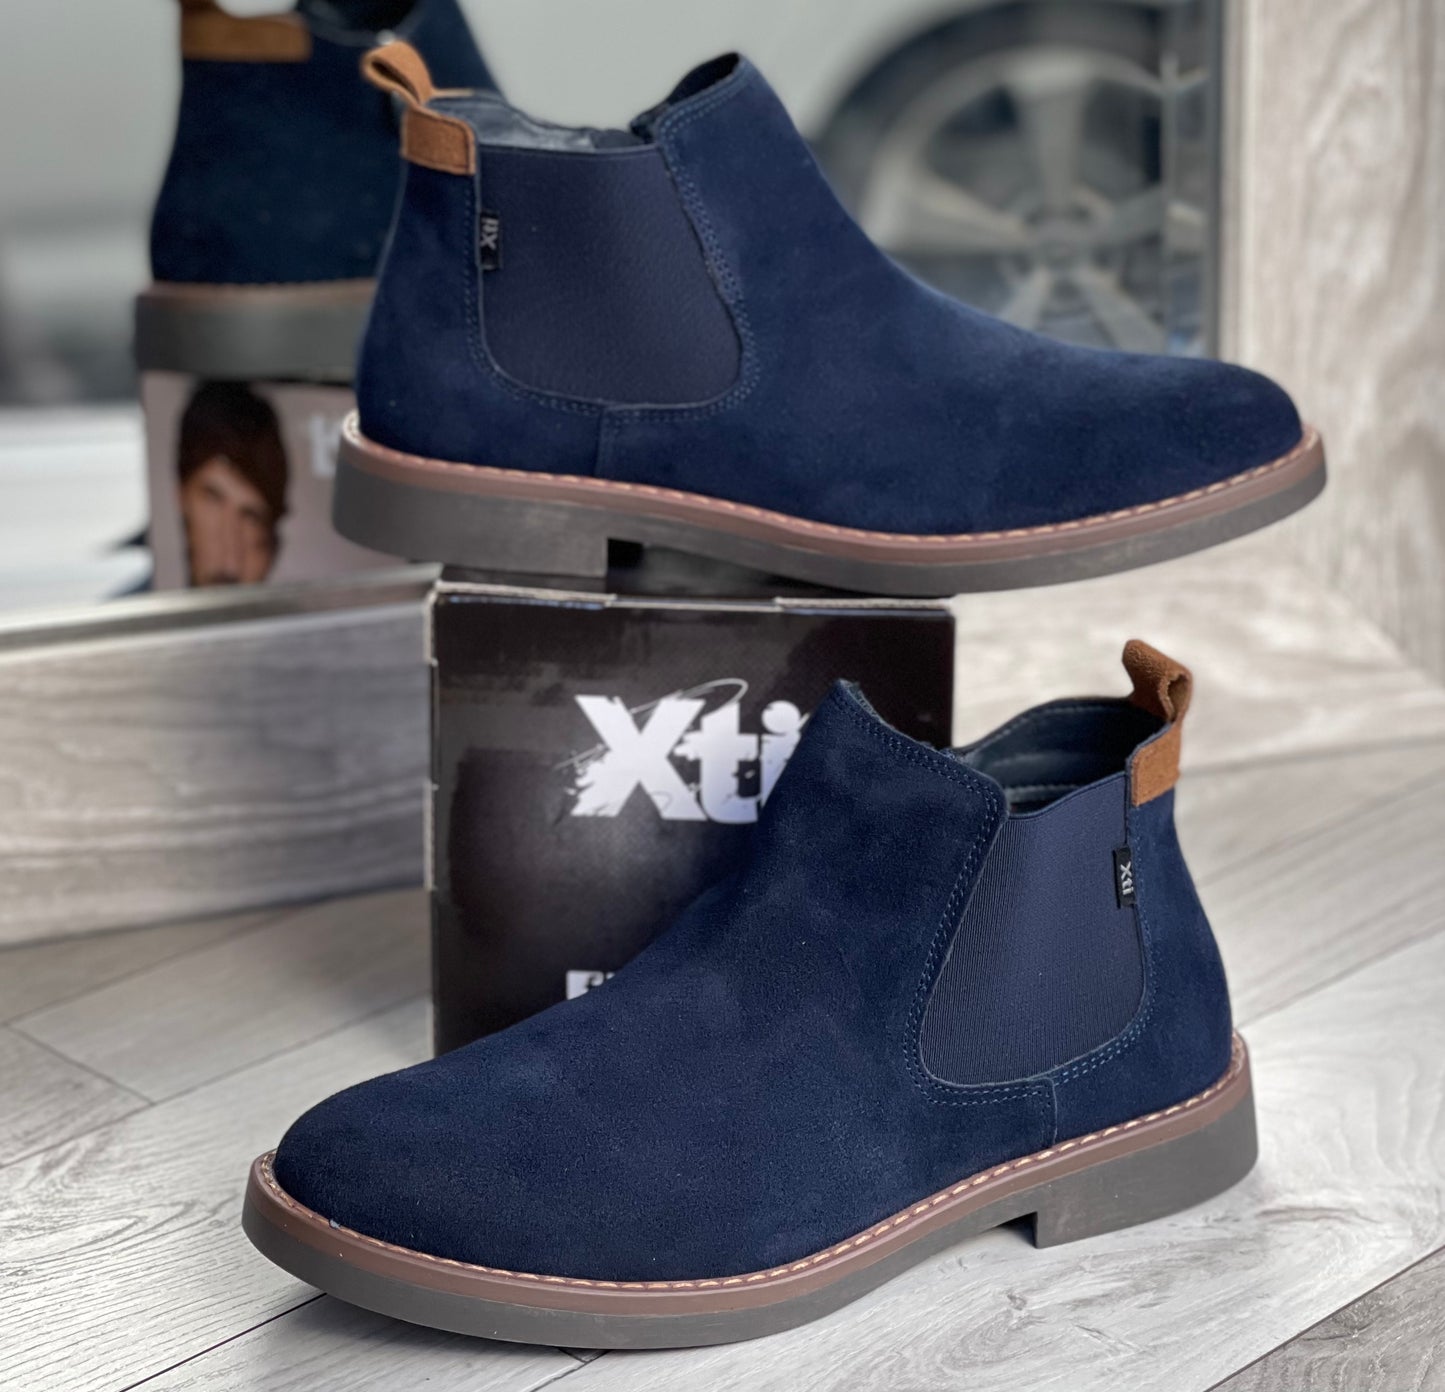 Xti - Men's Navy Leather Chelsea Boot